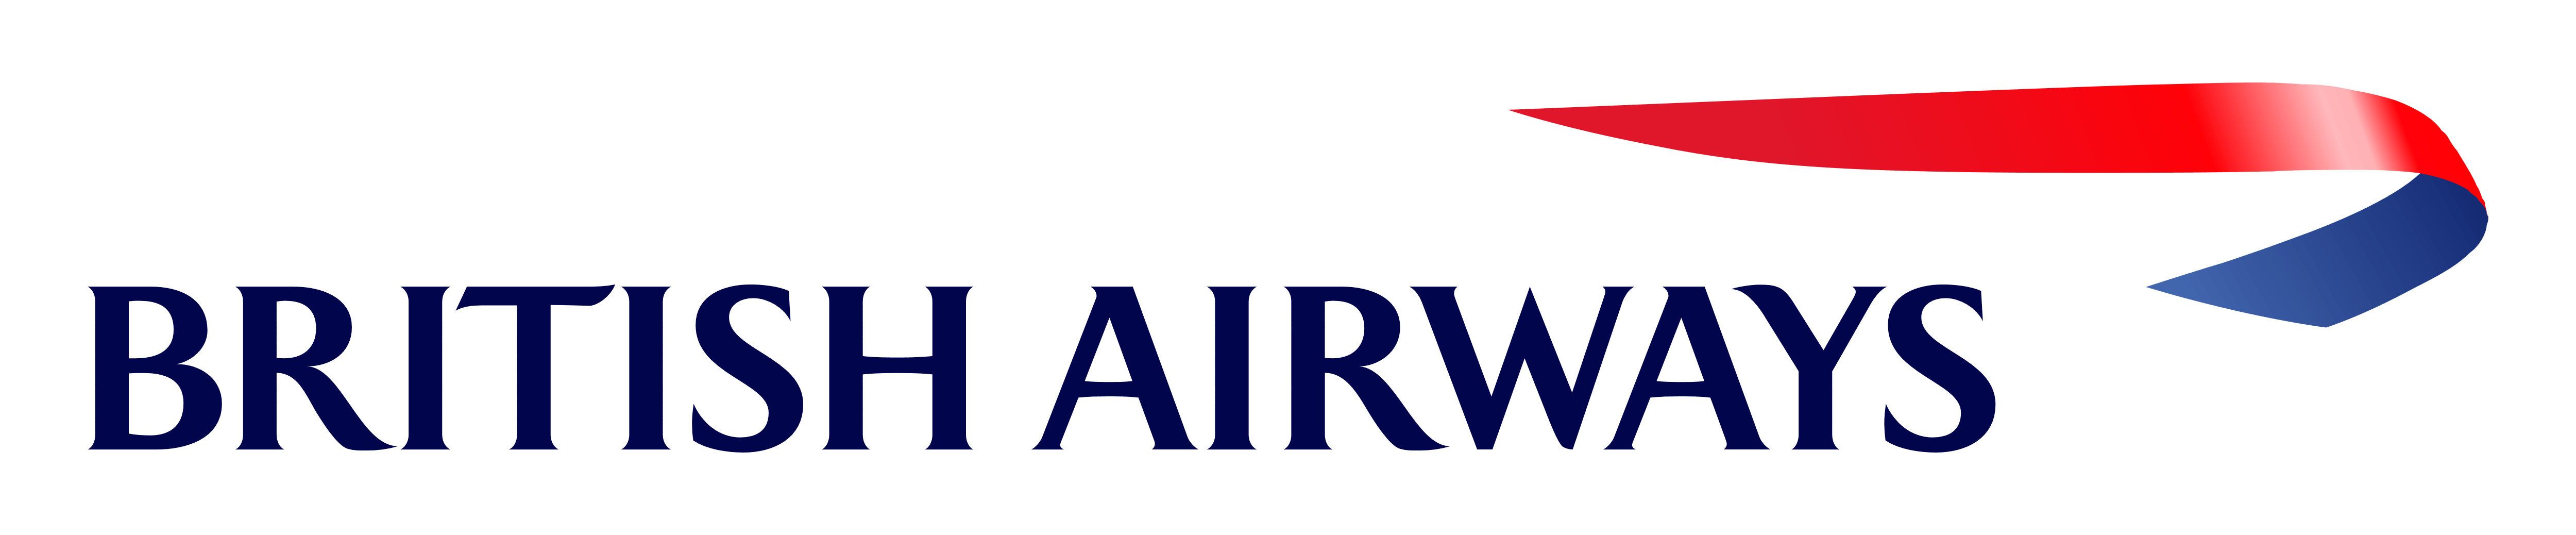 British Airlines Logo - British Airways